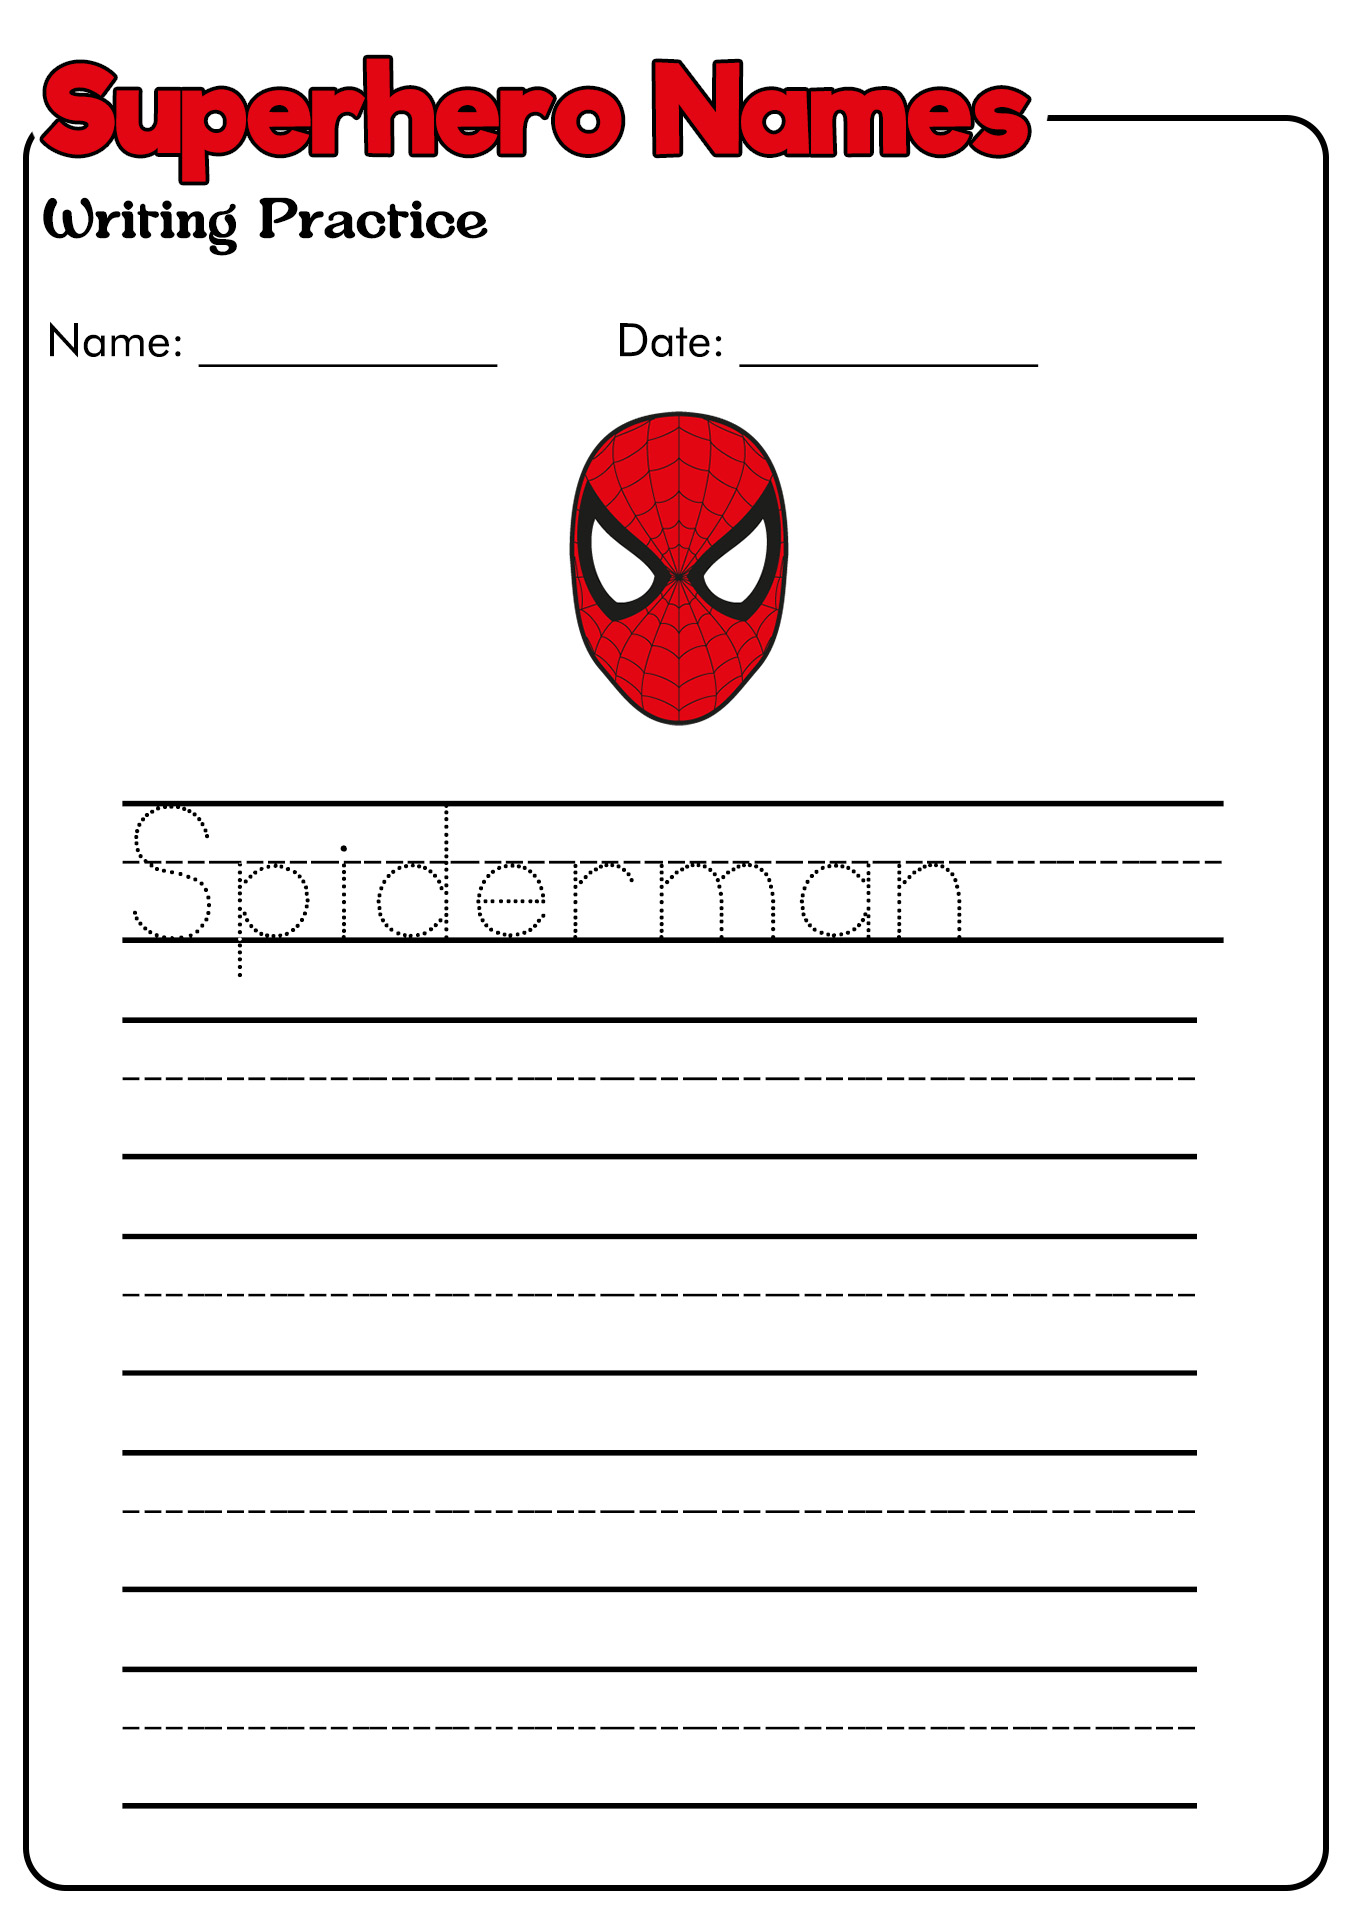 Super Heroes Letters Worksheet Image